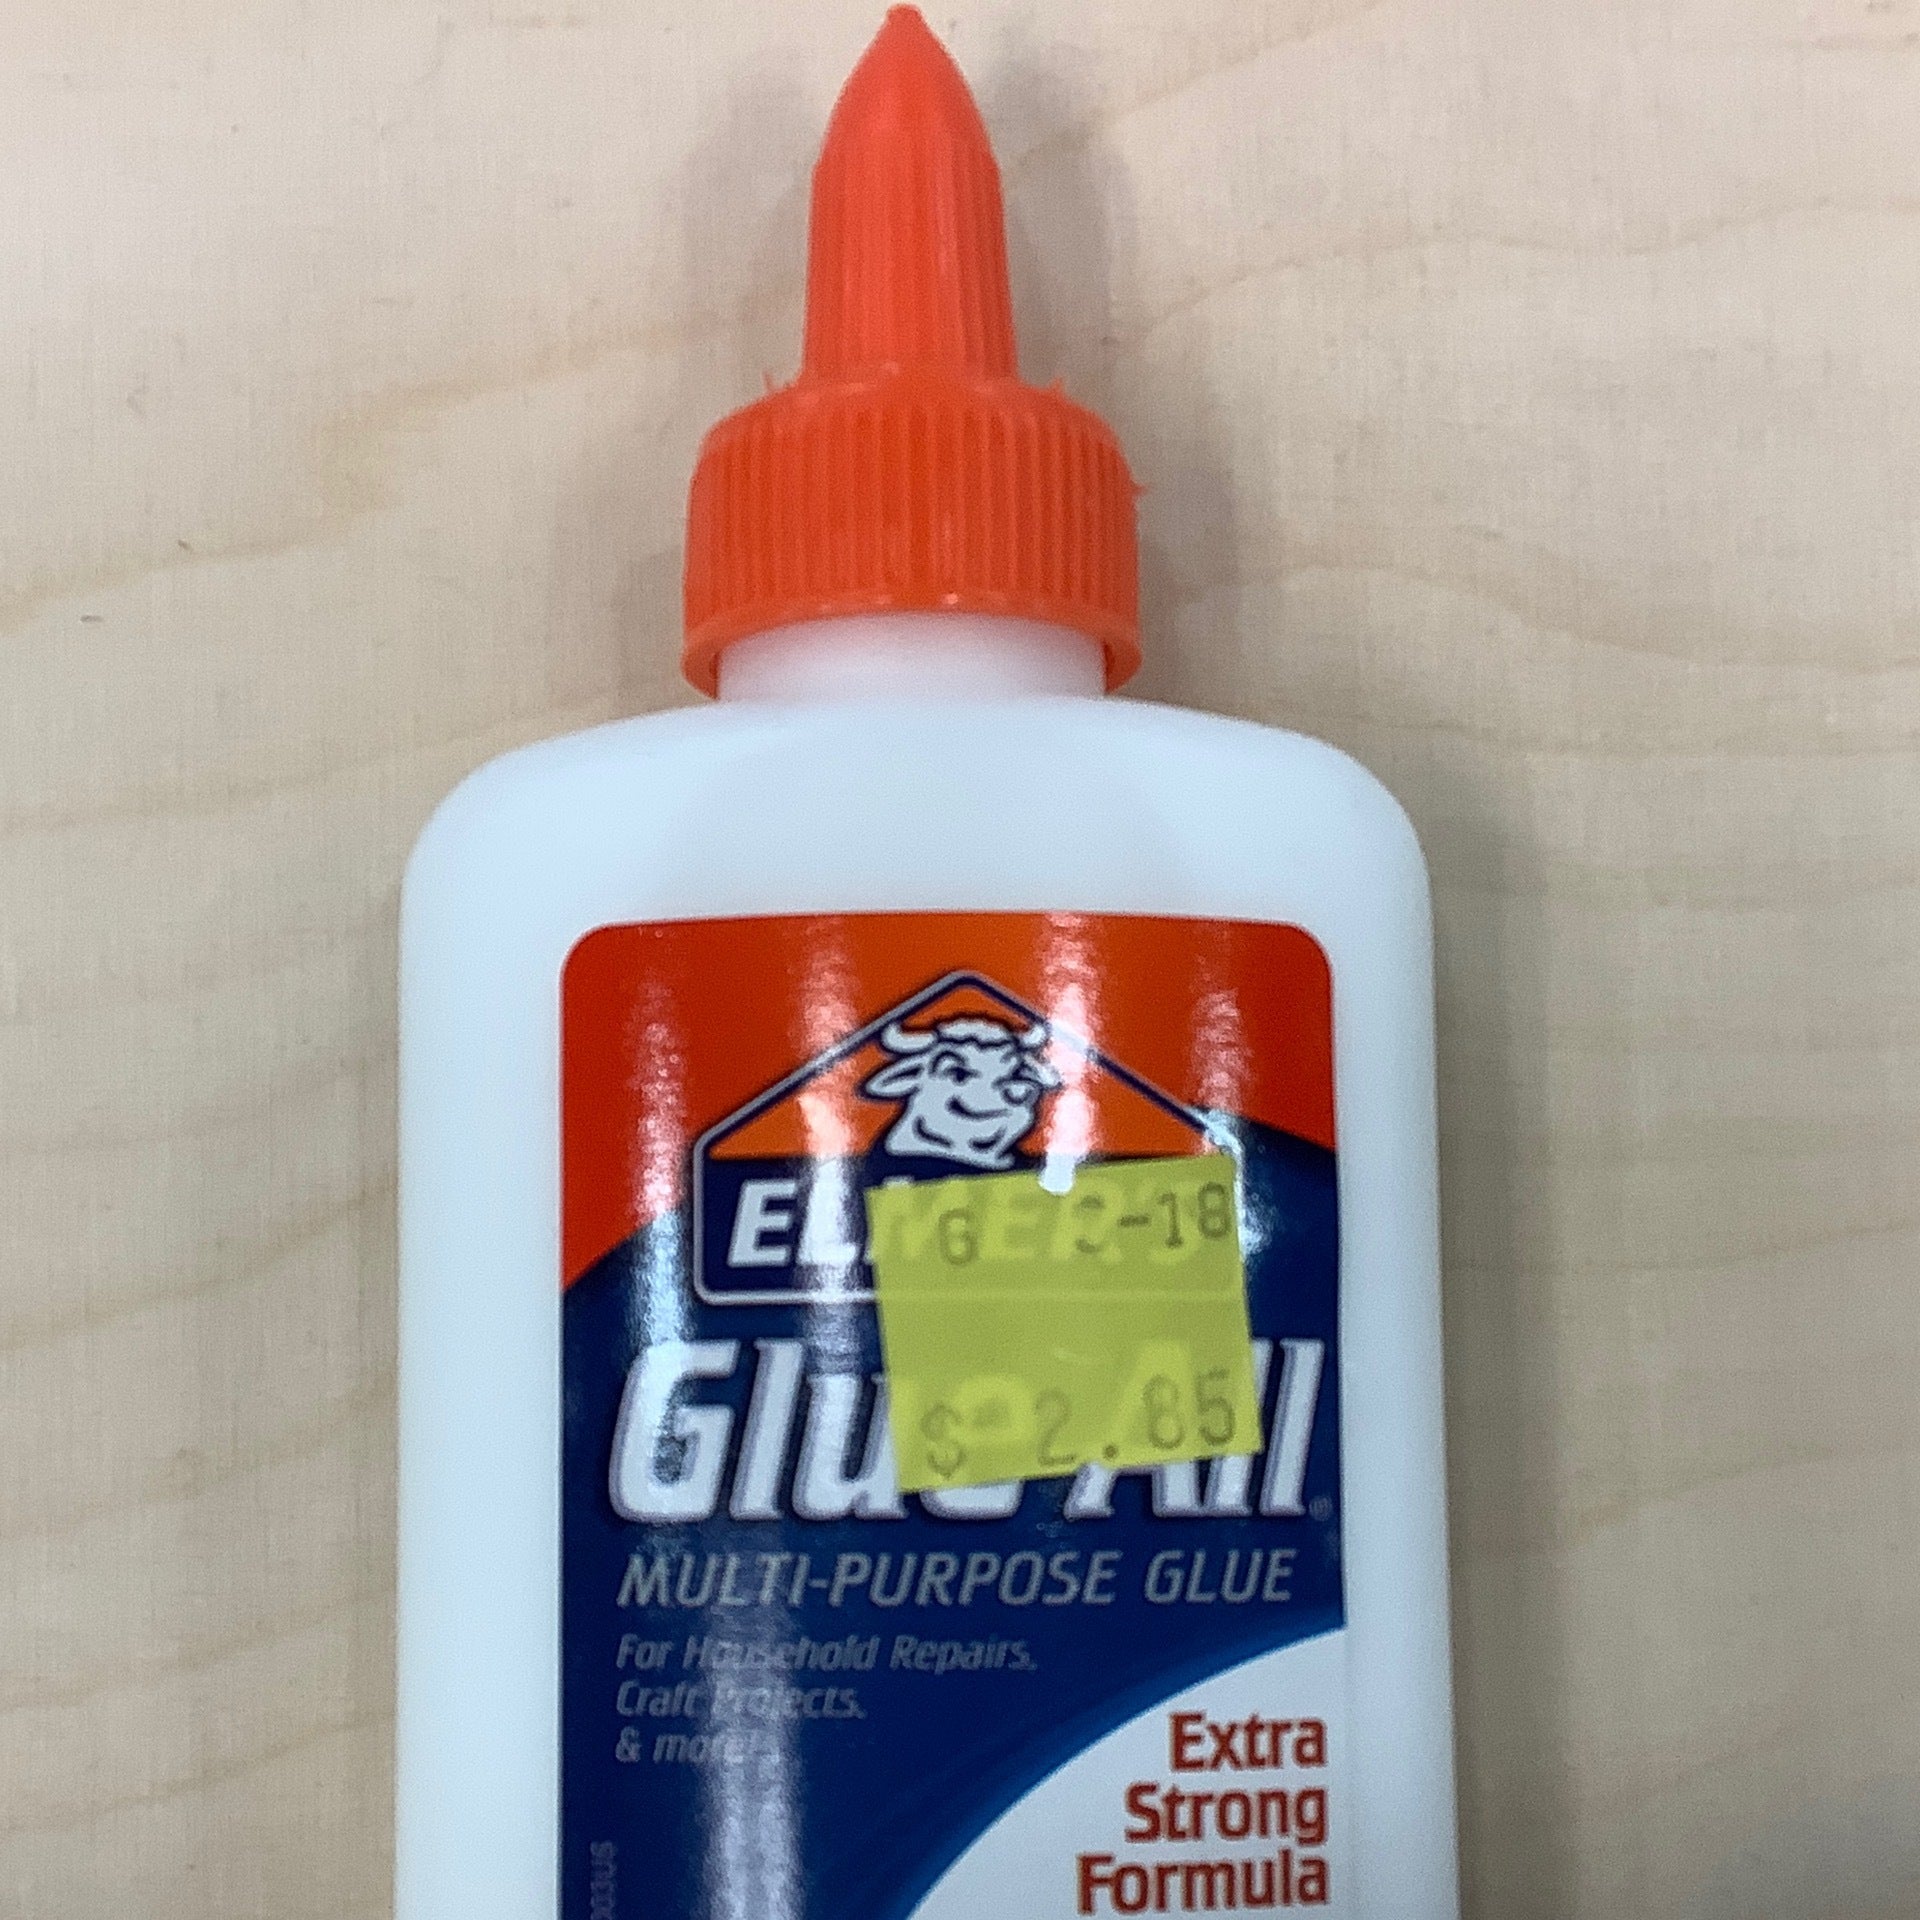 Elmer's Glue-All, 8oz Bottle, 236ml Multi-Purpose Glue